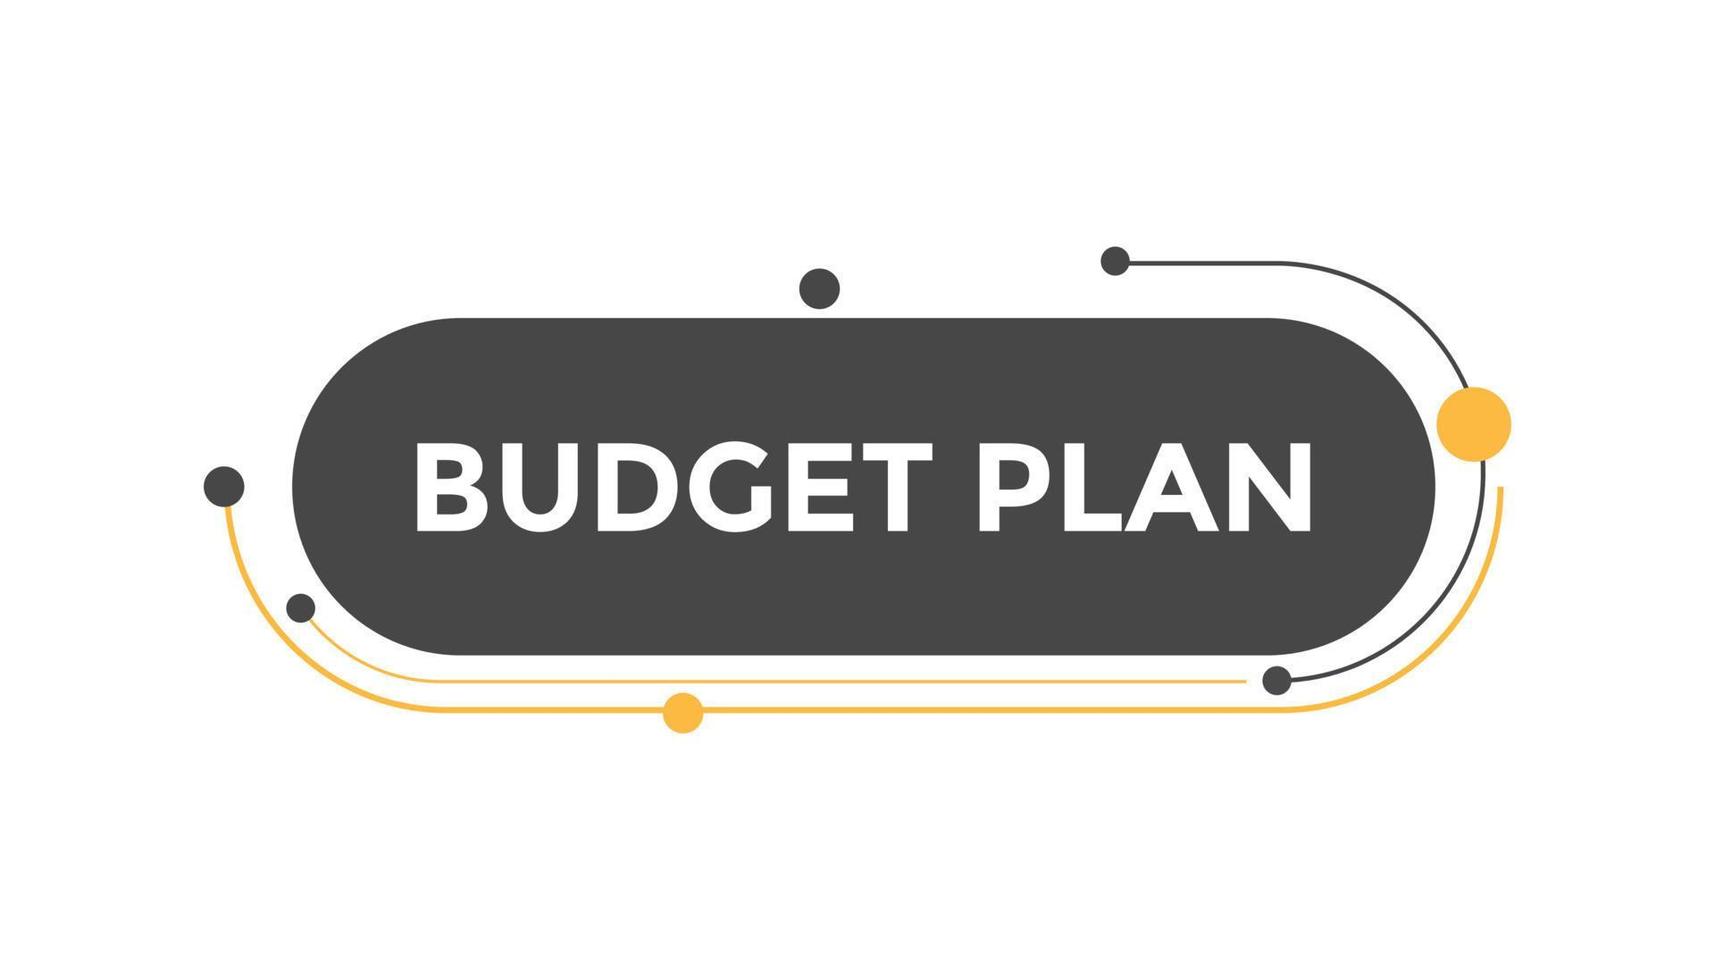 Budgetplan-Schaltflächen-Web-Banner-Vorlagen. Vektor-Illustration vektor